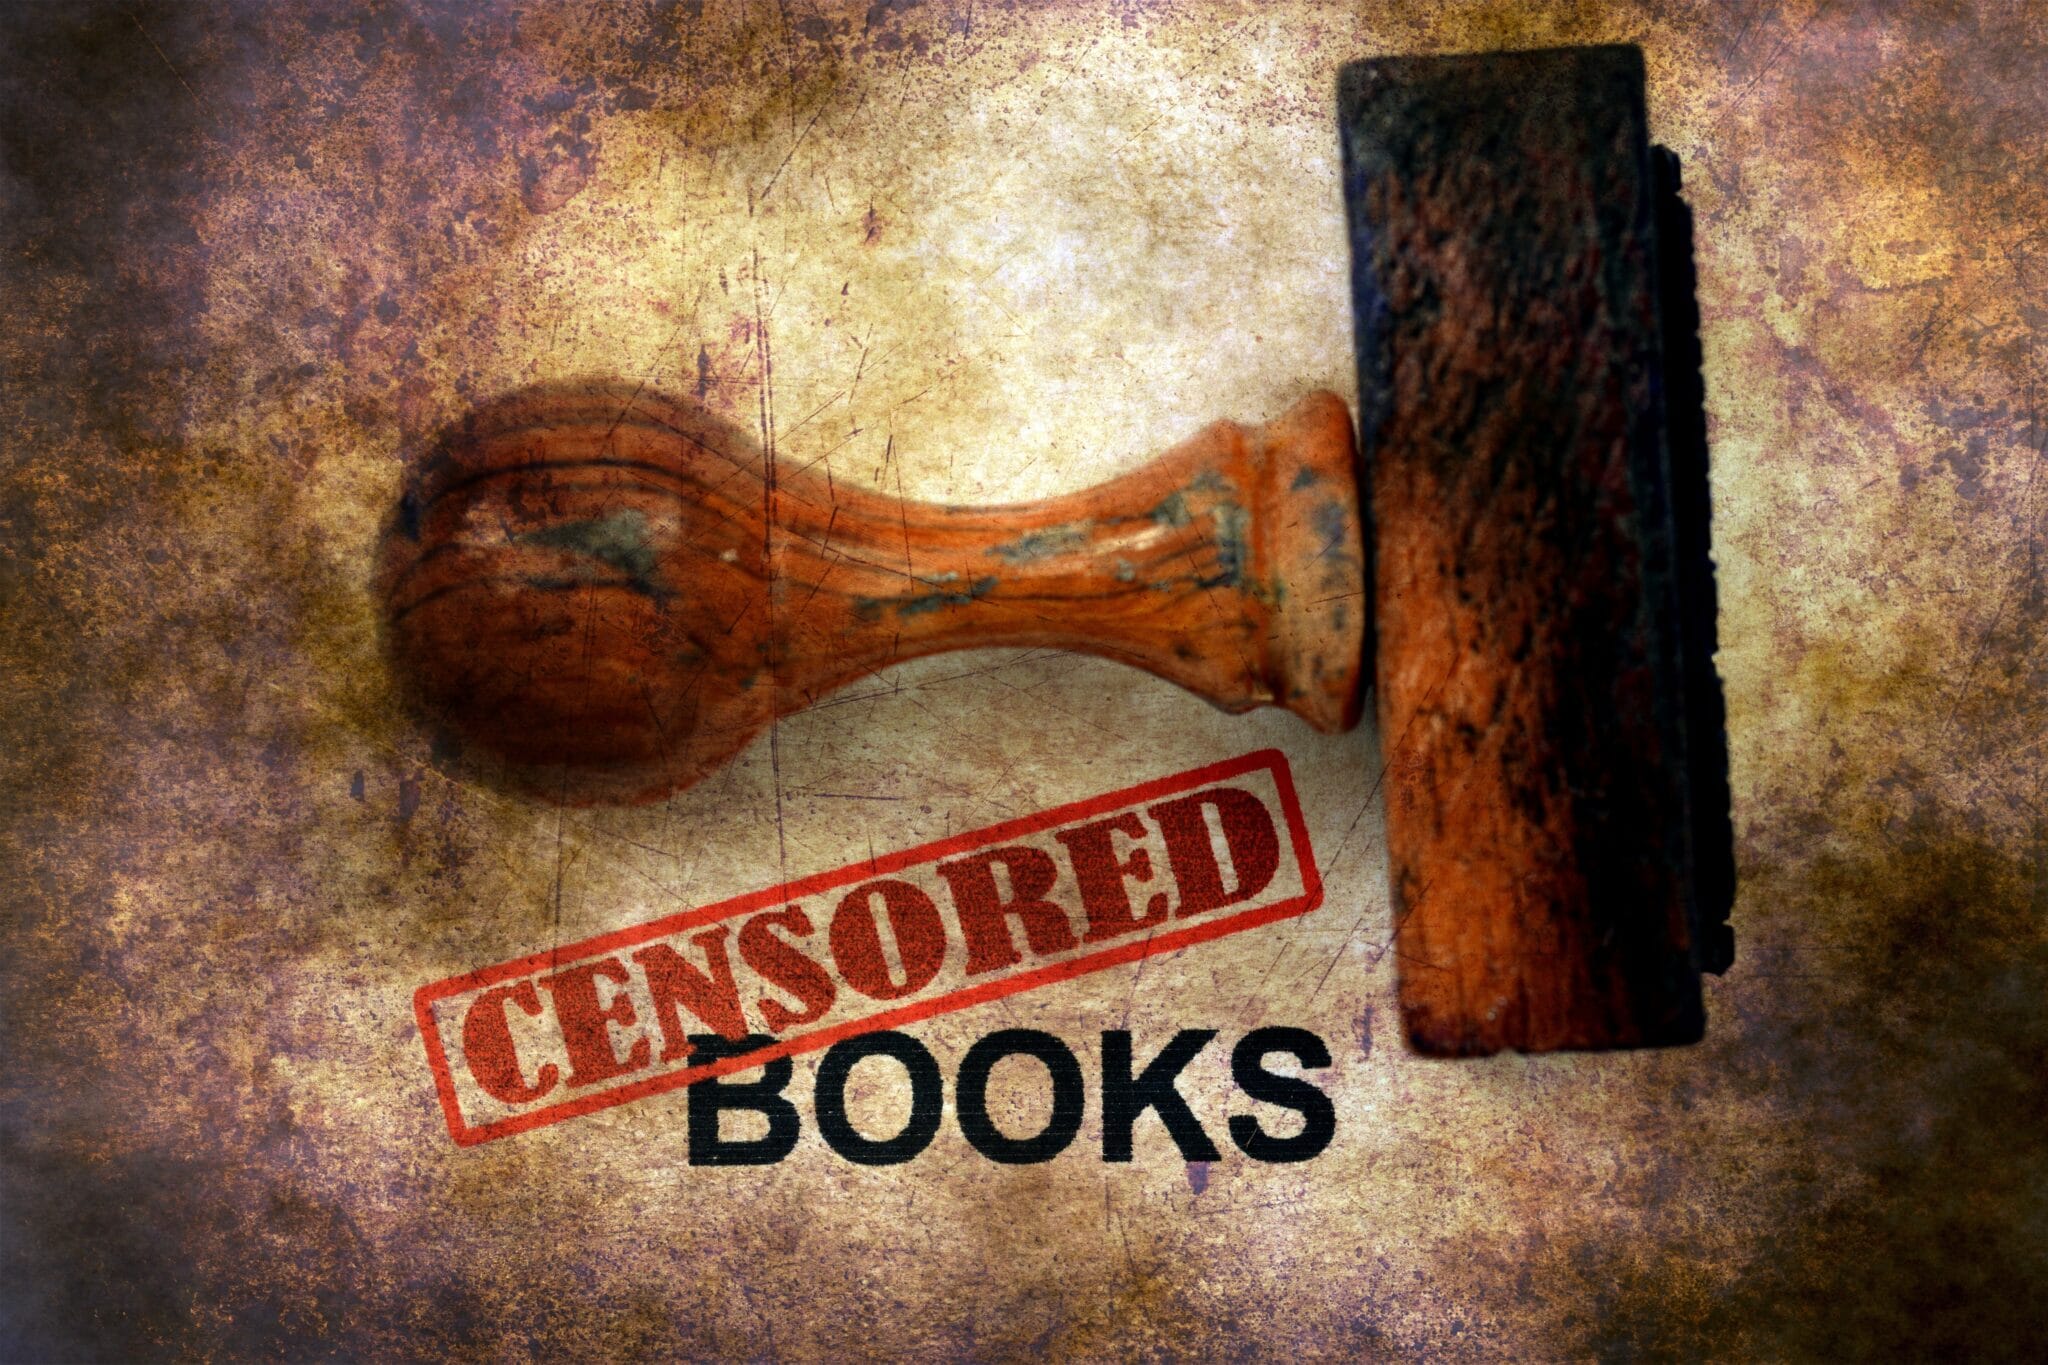 Georgia Republicans push book bans in school libraries